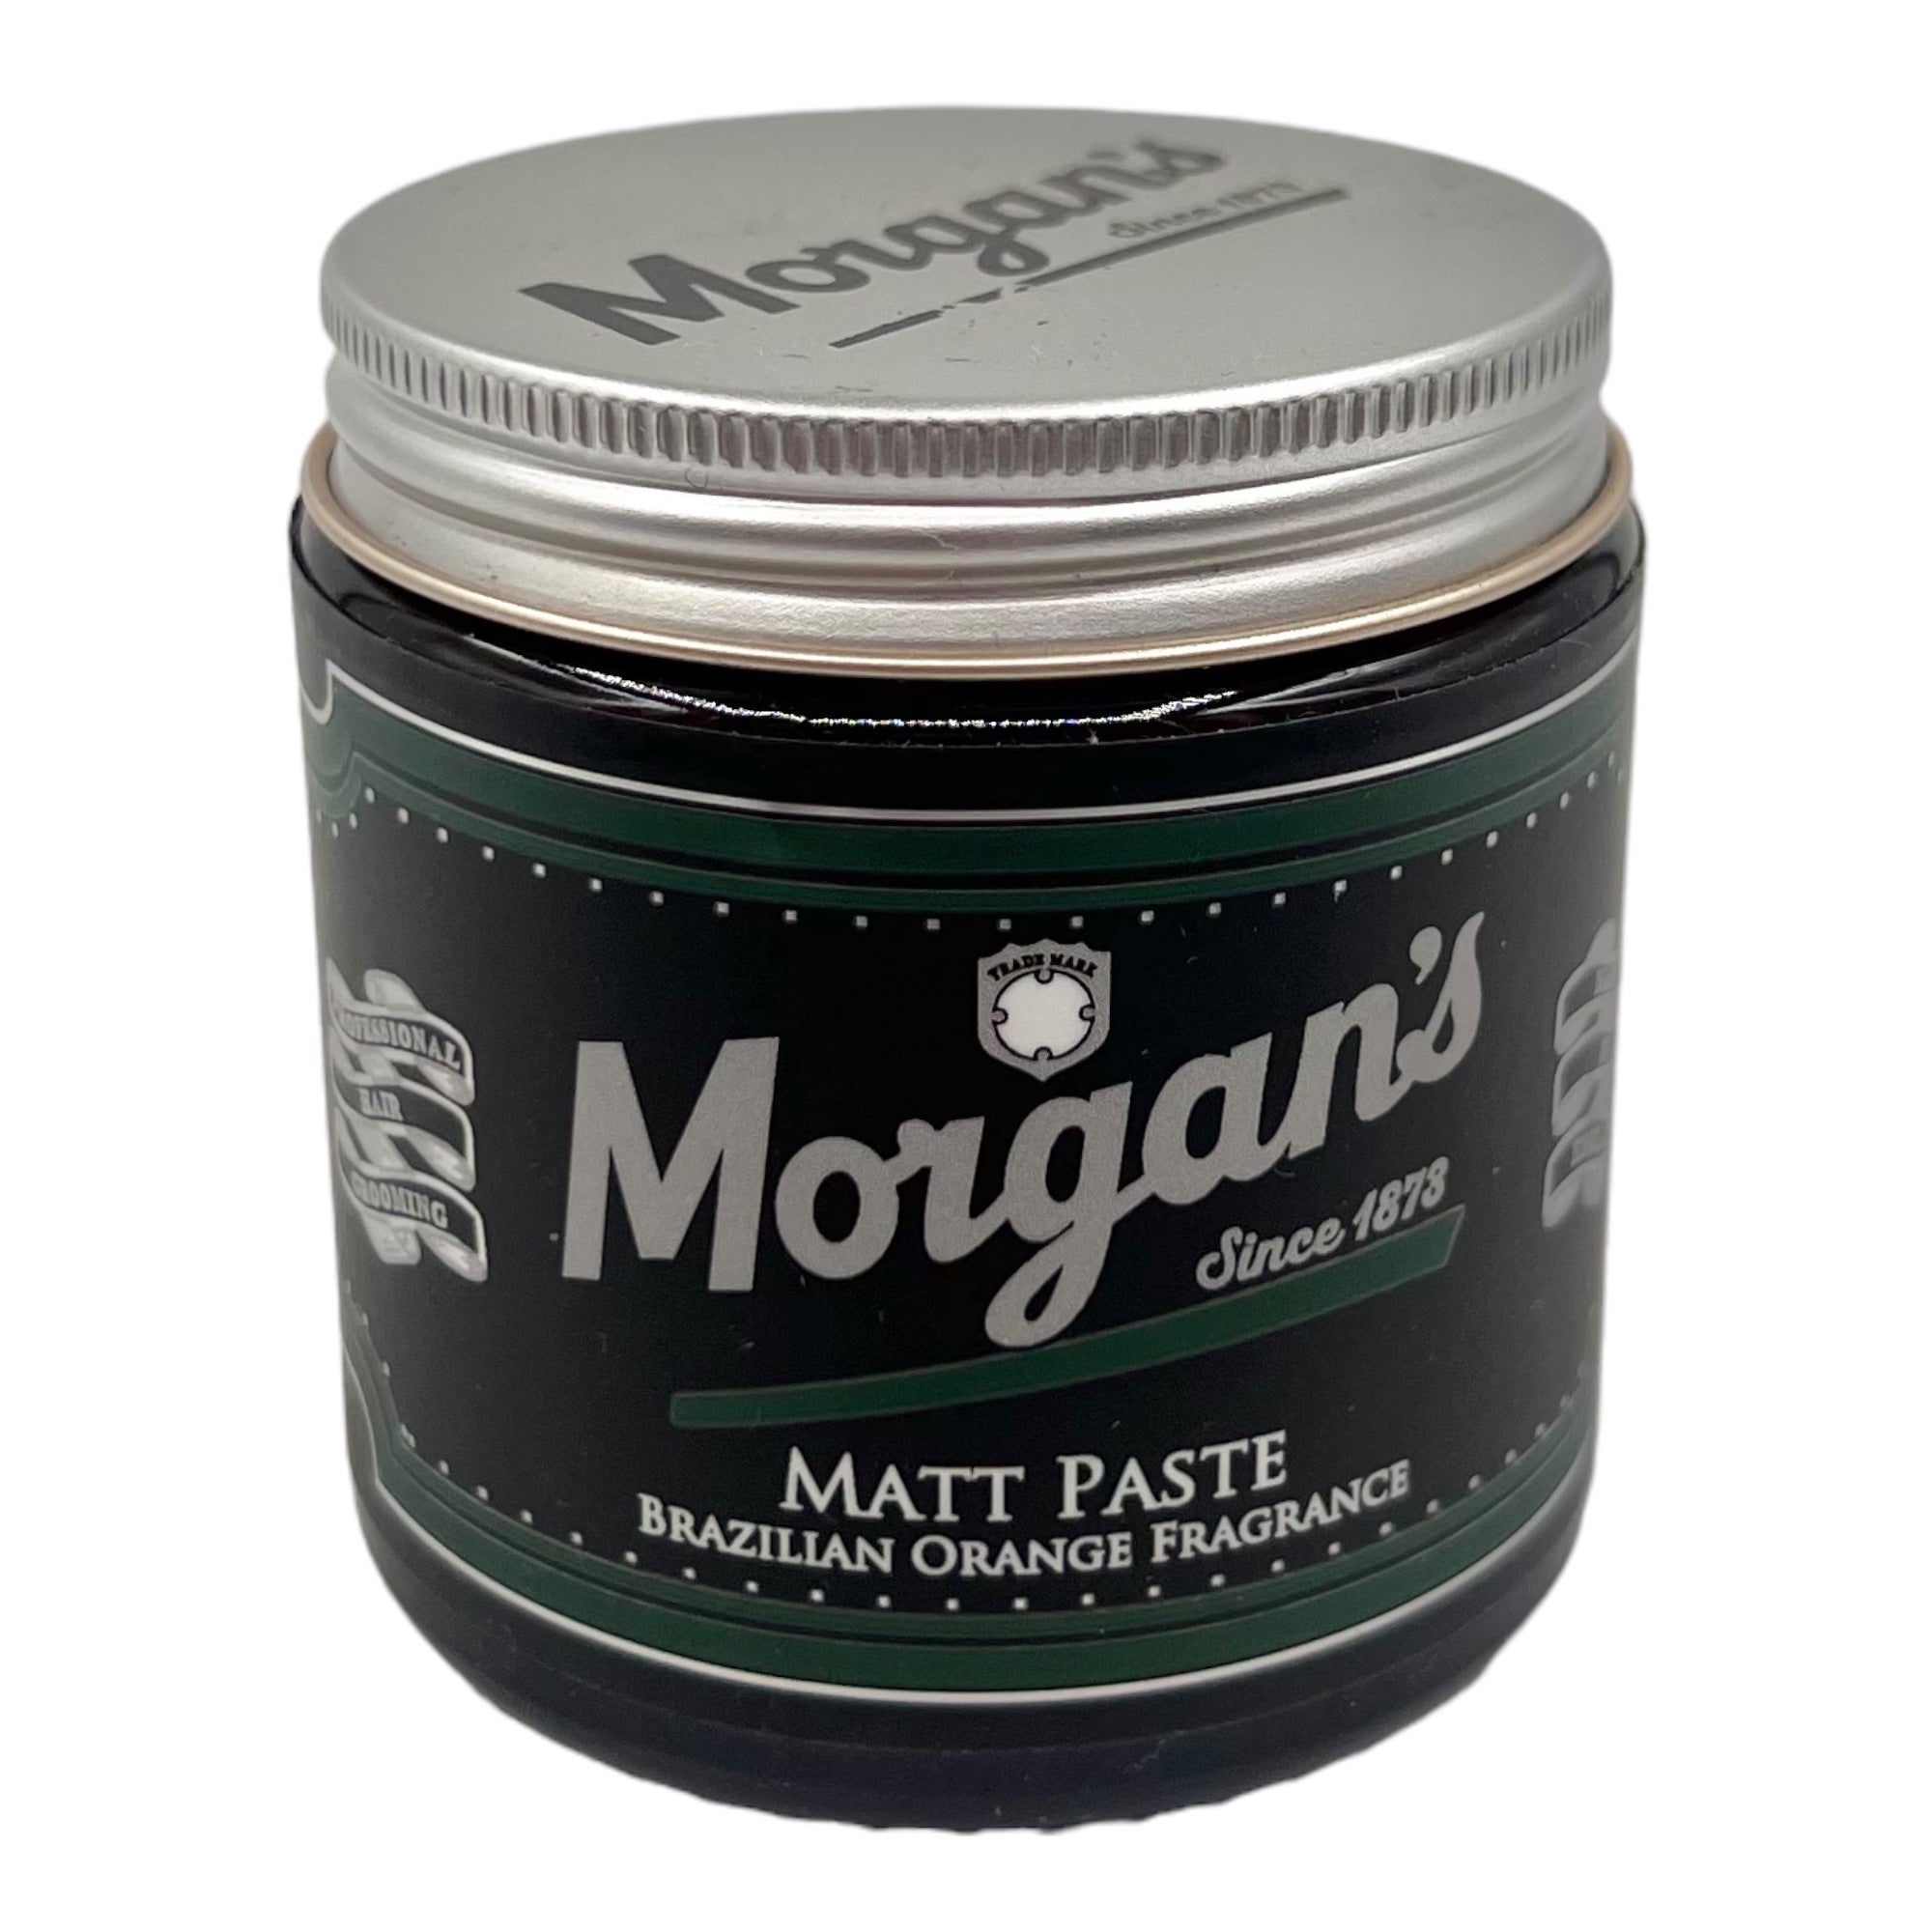 Morgan's - Matt Paste Brazilian Orange Fragrance 120ml